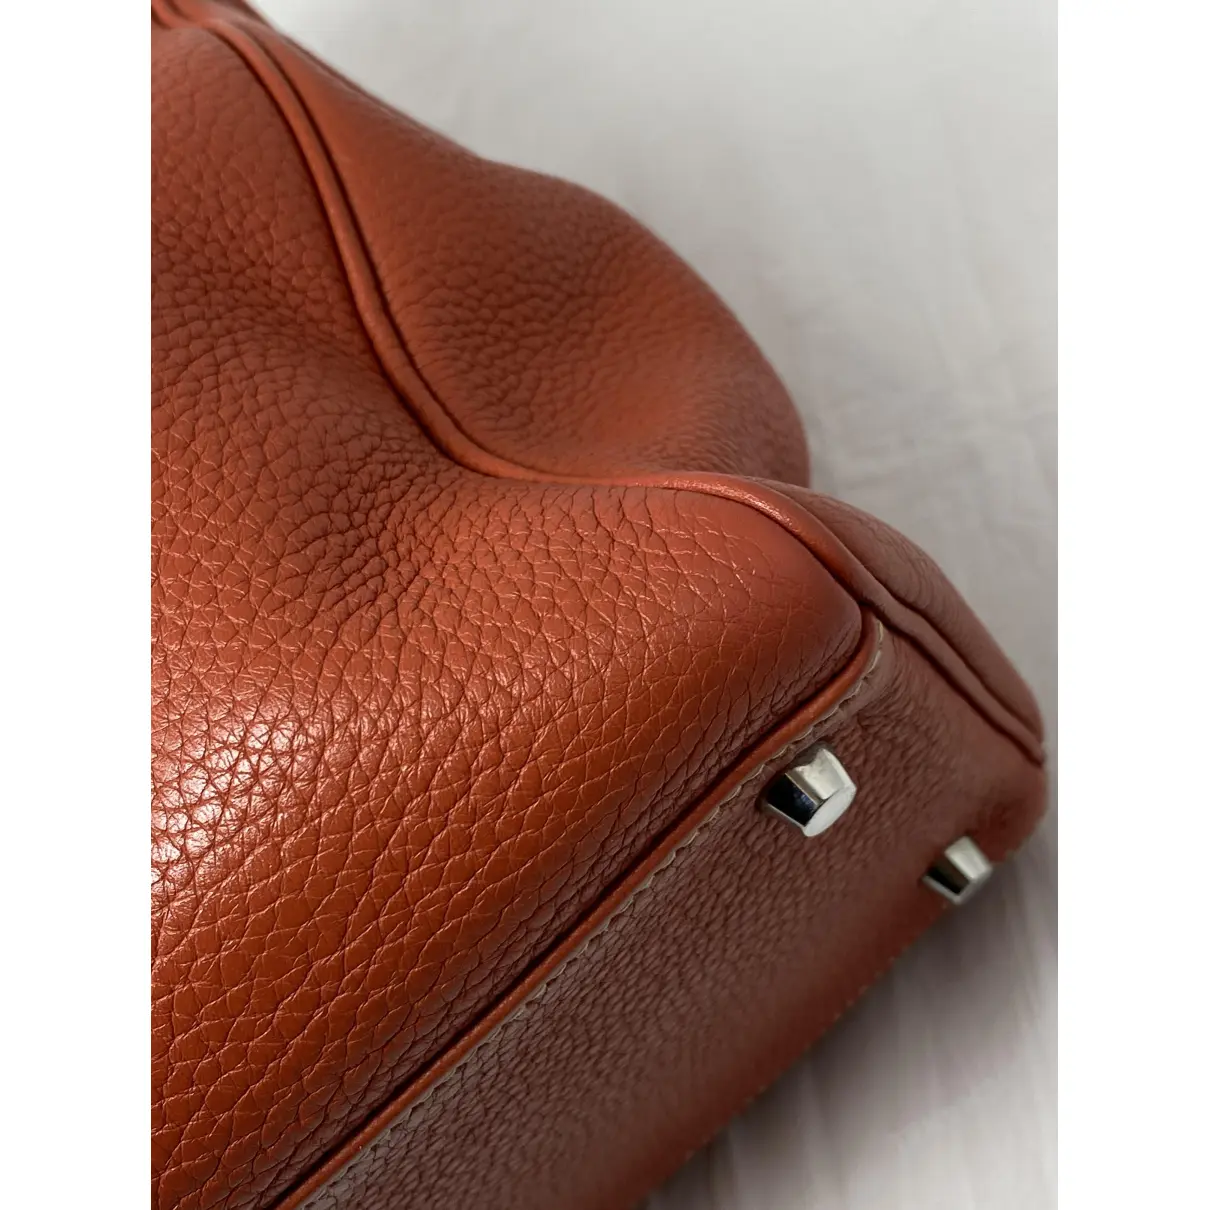 Buy Hermès Kelly 40 leather handbag online